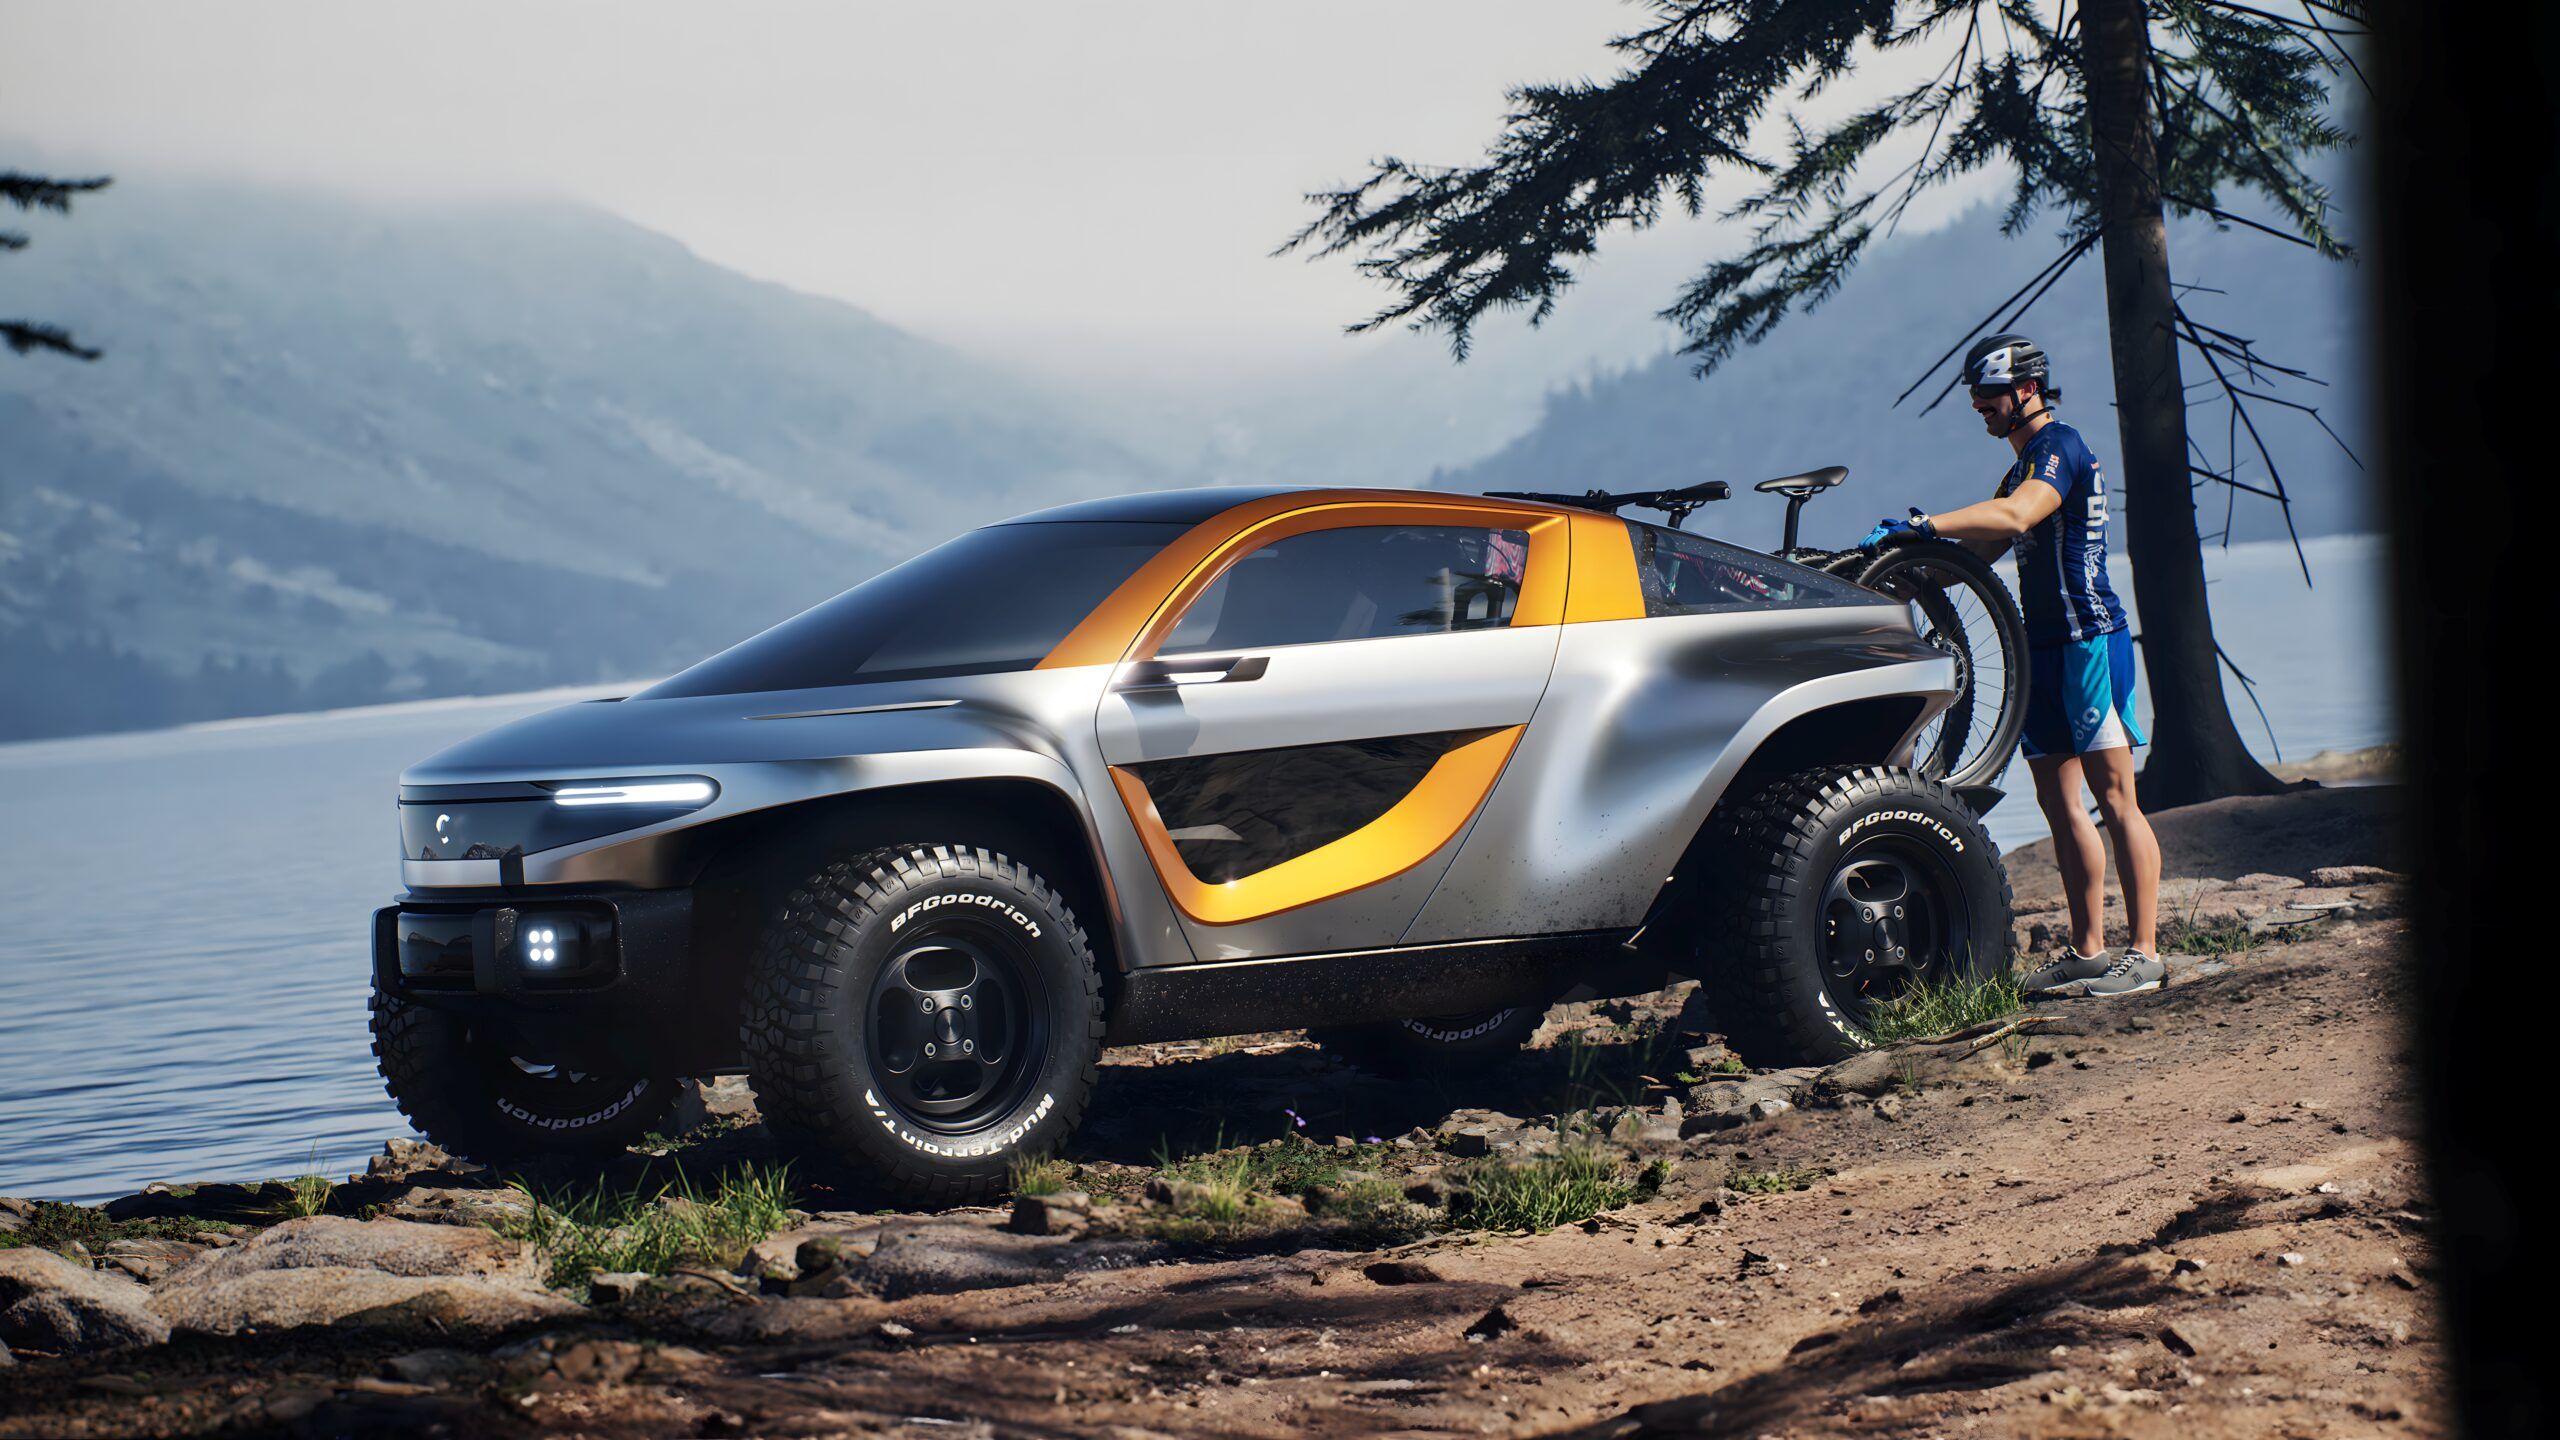 CALLUM reveals SKYE:The world’s most beautifulhigh-performance, multi-terrain vehicle